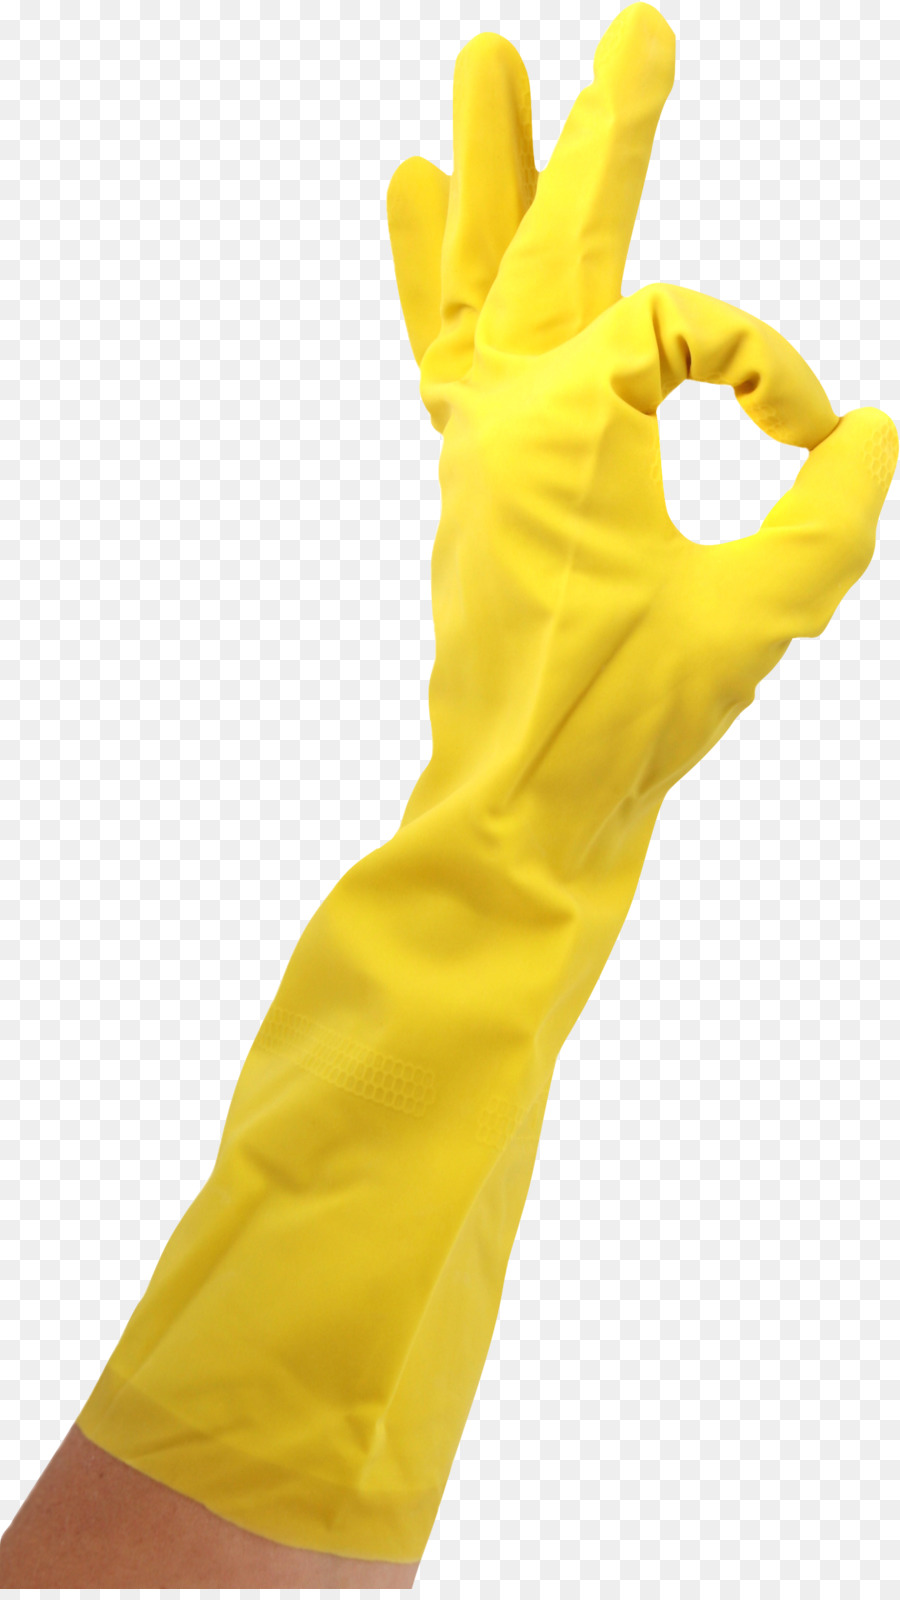 glove clipart yellow glove